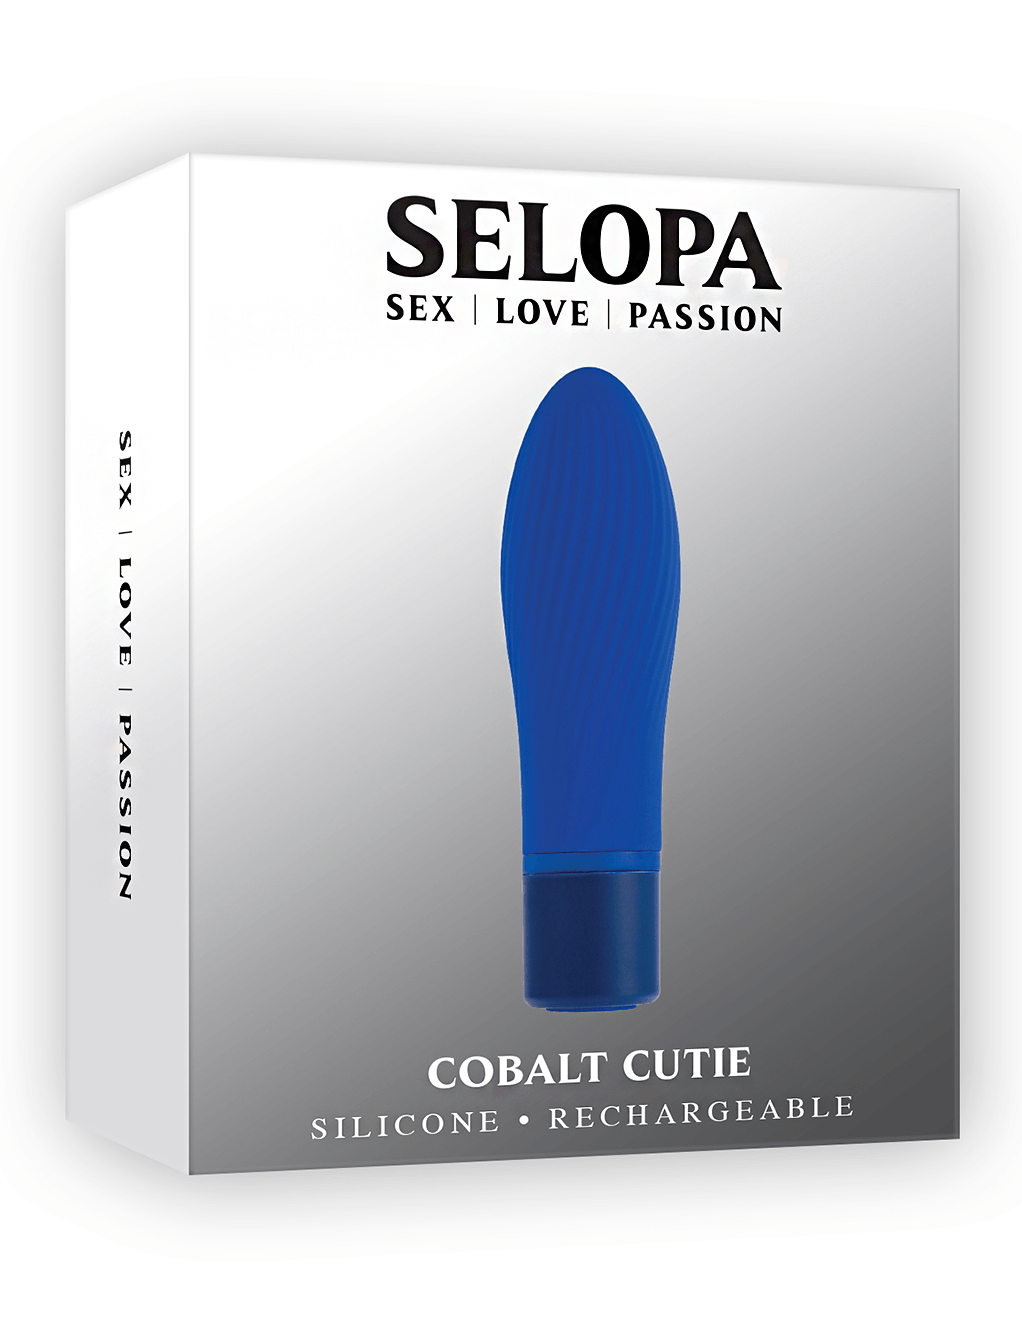 Selopa Cobalt Cutie - Box Front